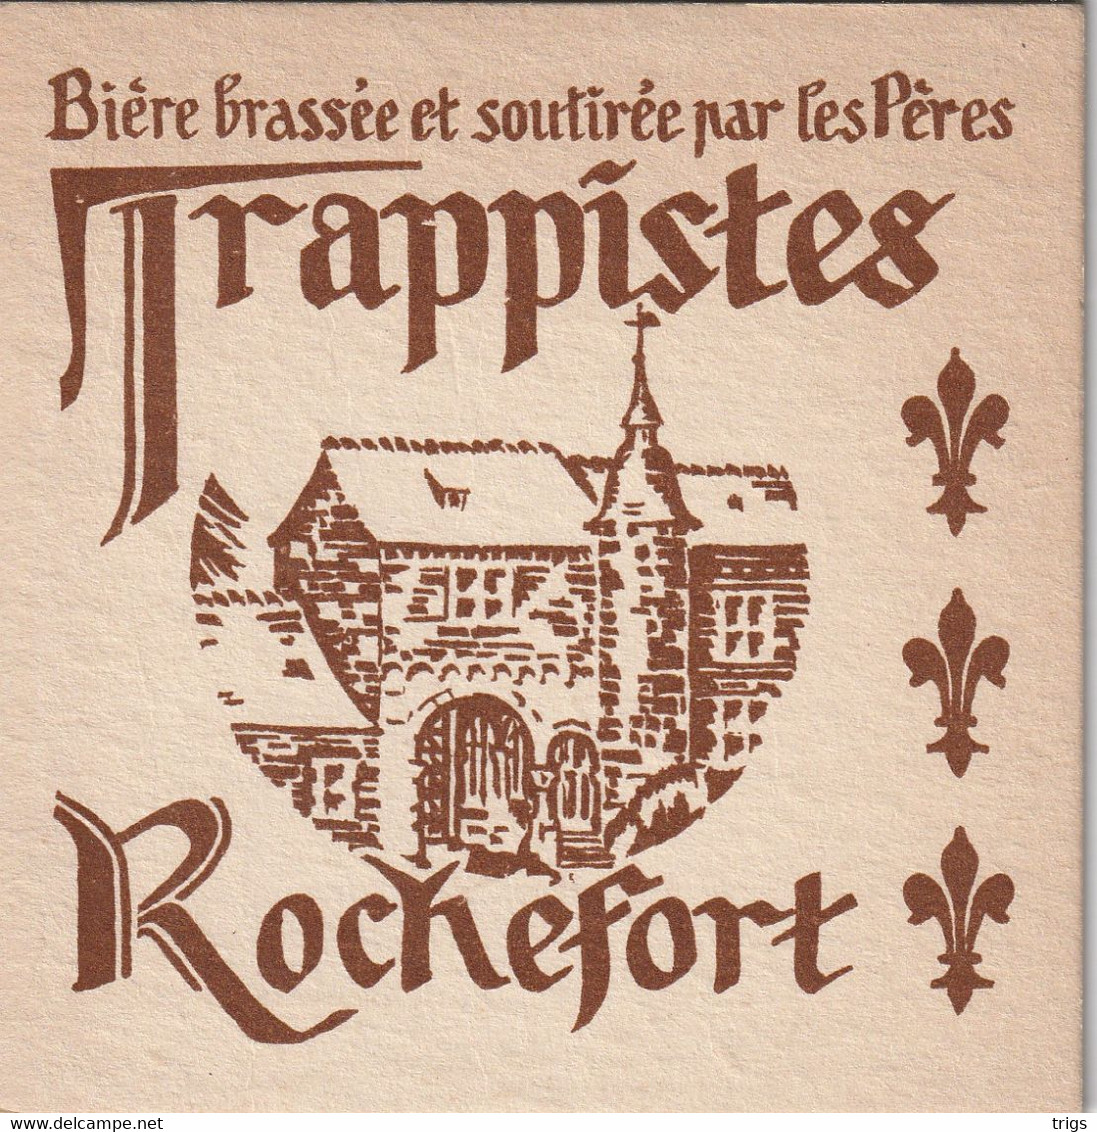 Trappistes Rochefort - Sous-verres